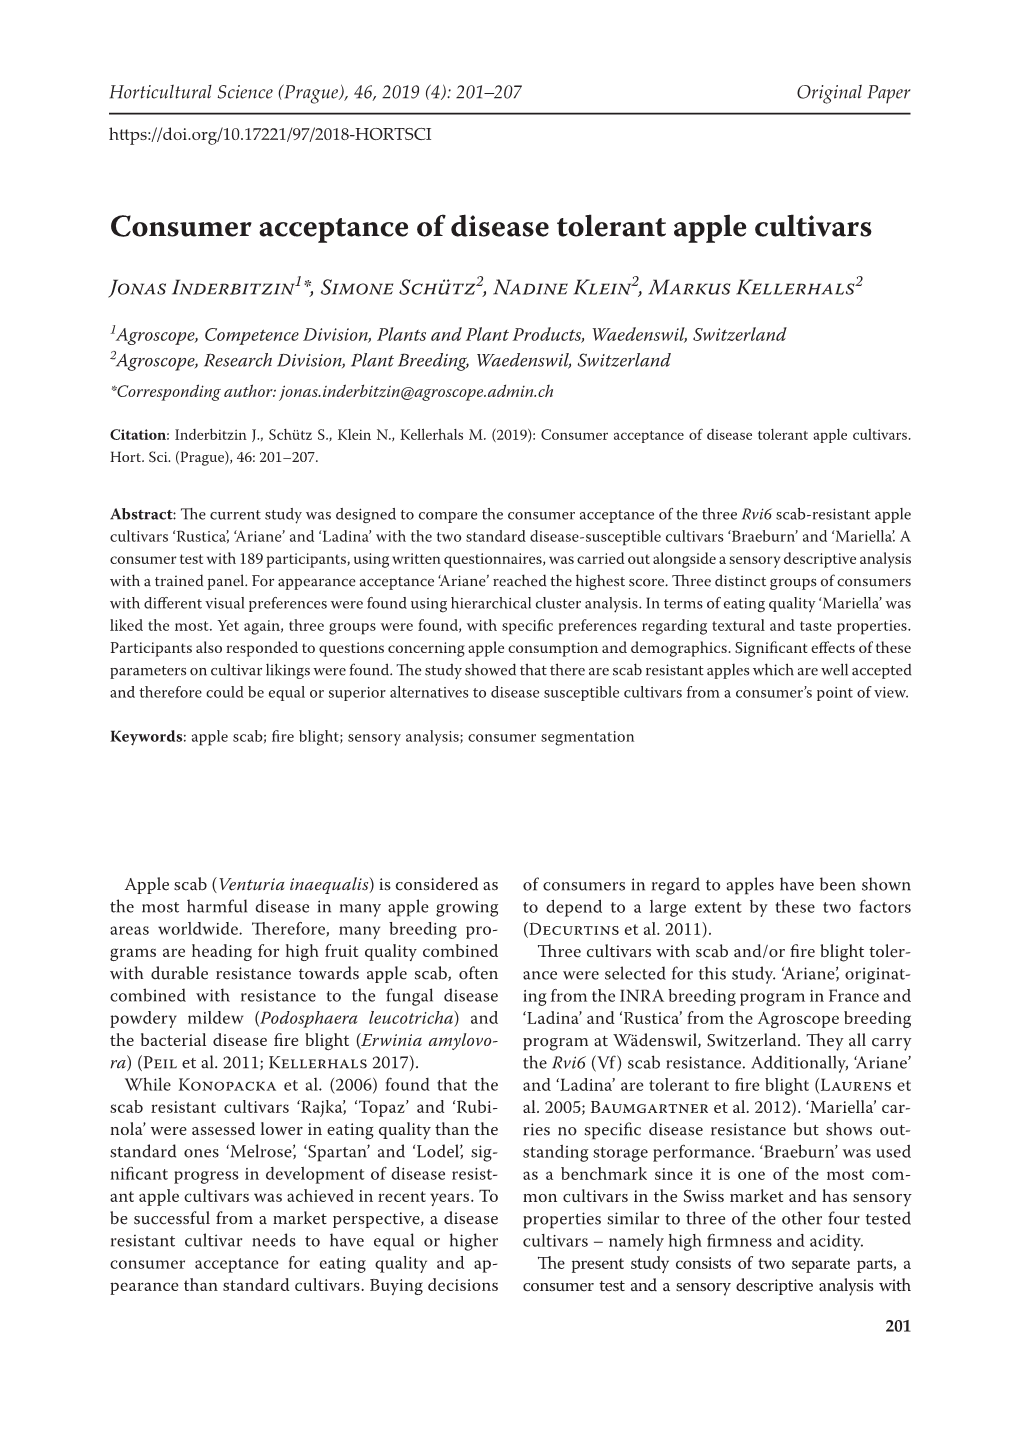 Consumer Acceptance of Disease Tolerant Apple Cultivars